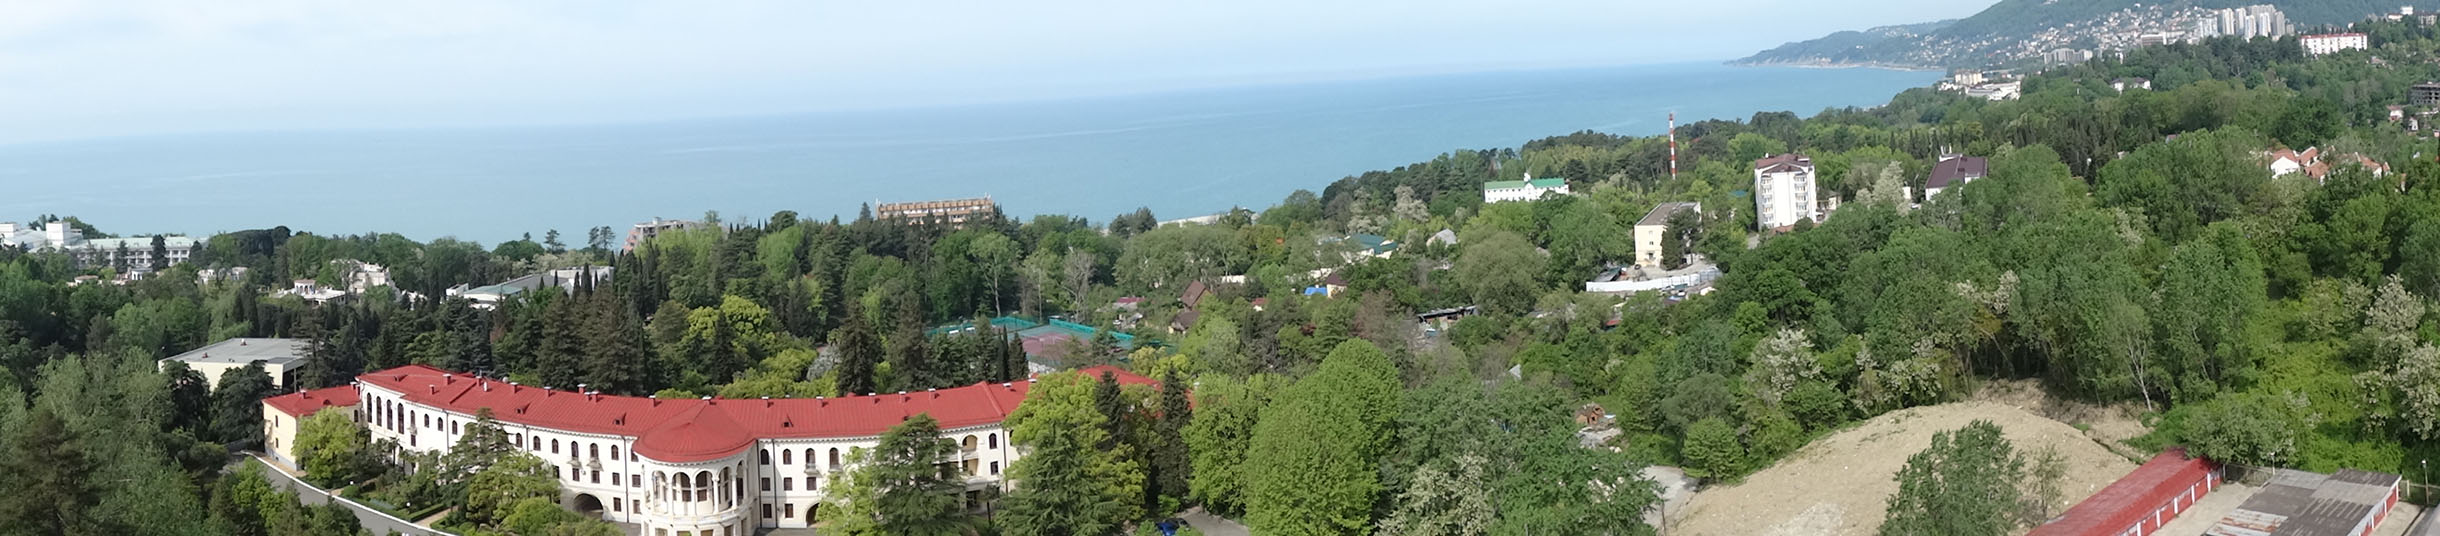 Панорама продажа апартаментов Санаторий Беларусь города Сочи